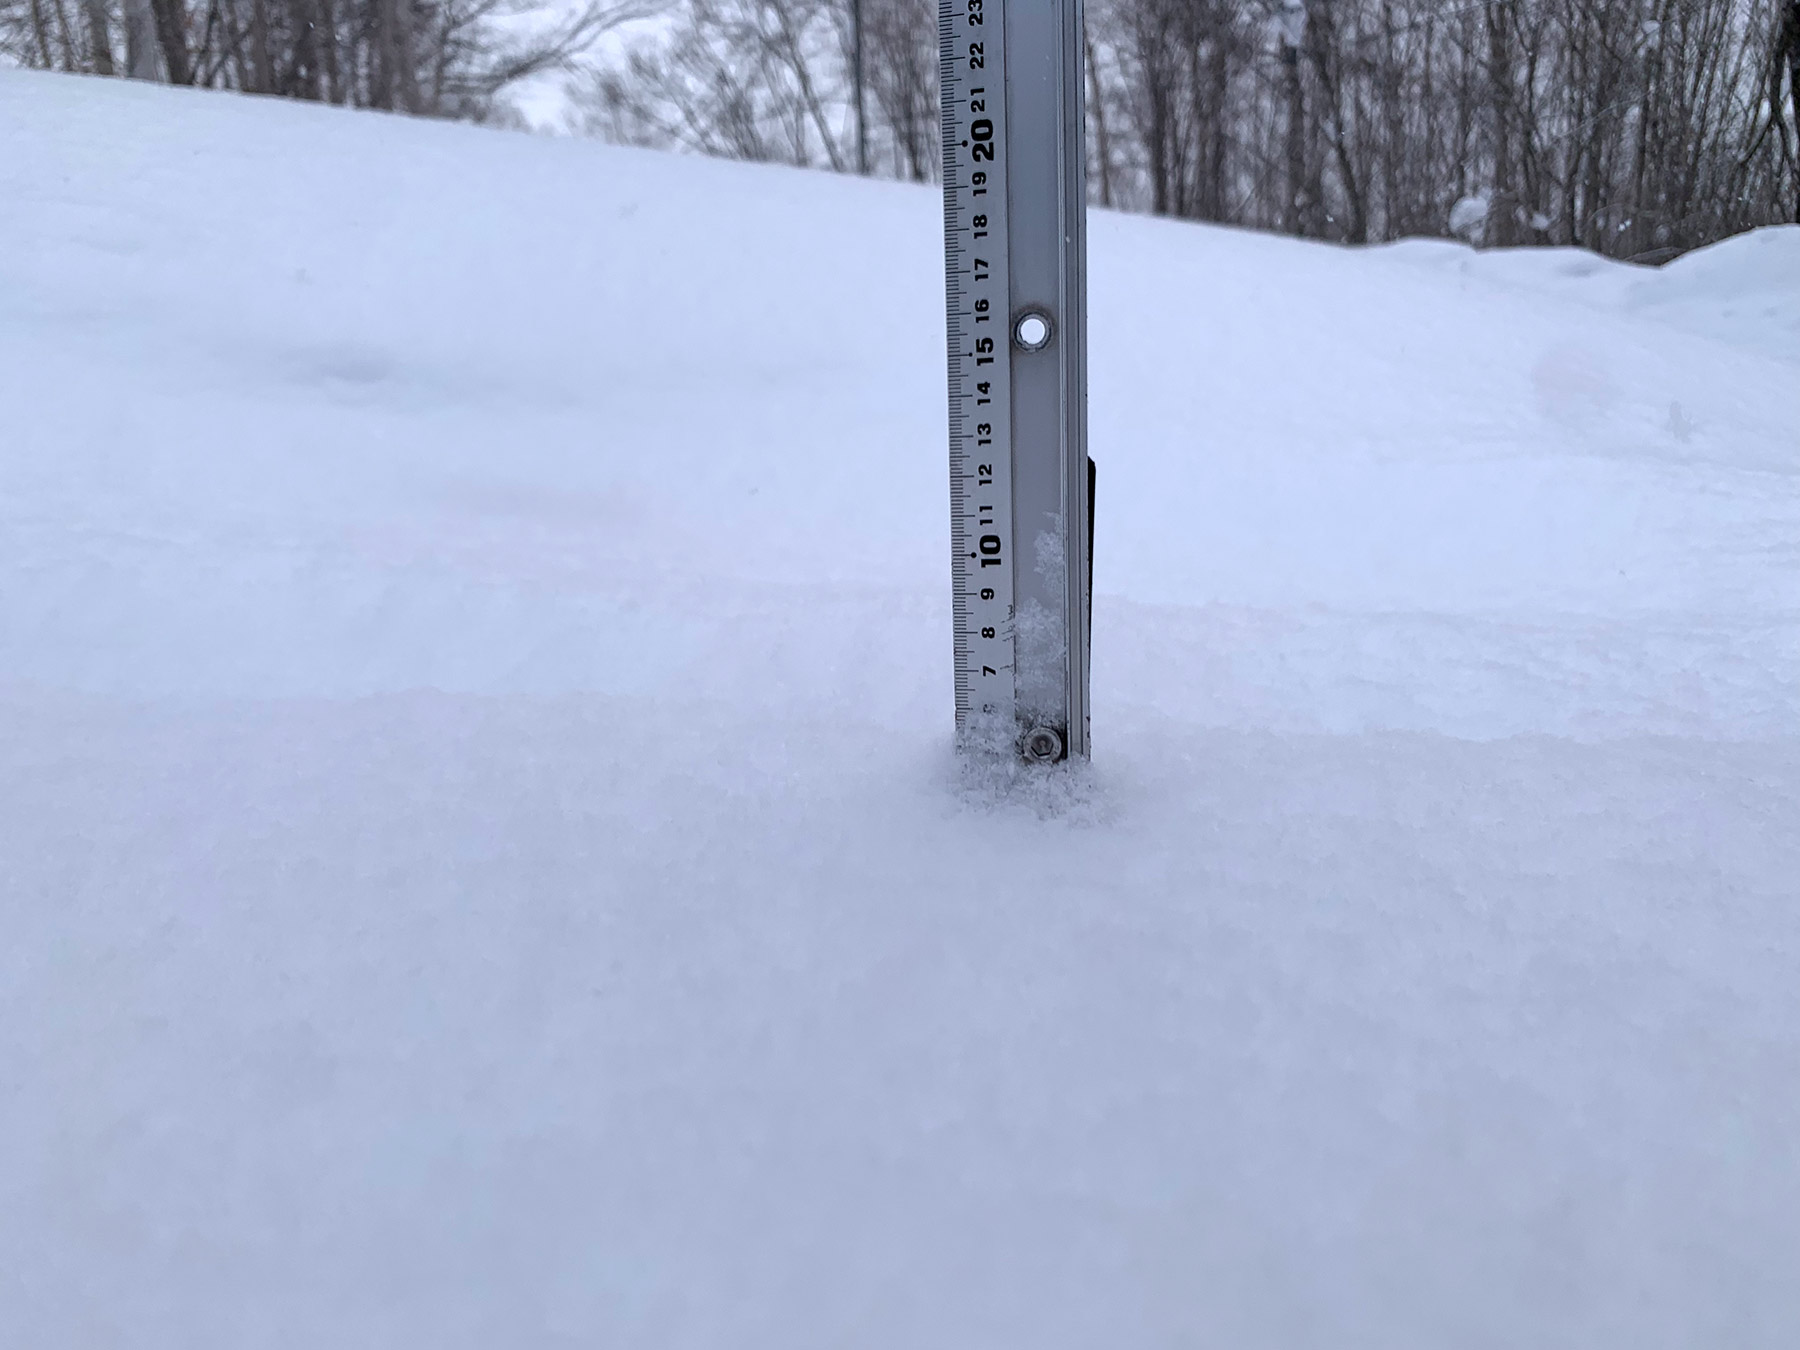 Niseko Snow Report, 18 February 20